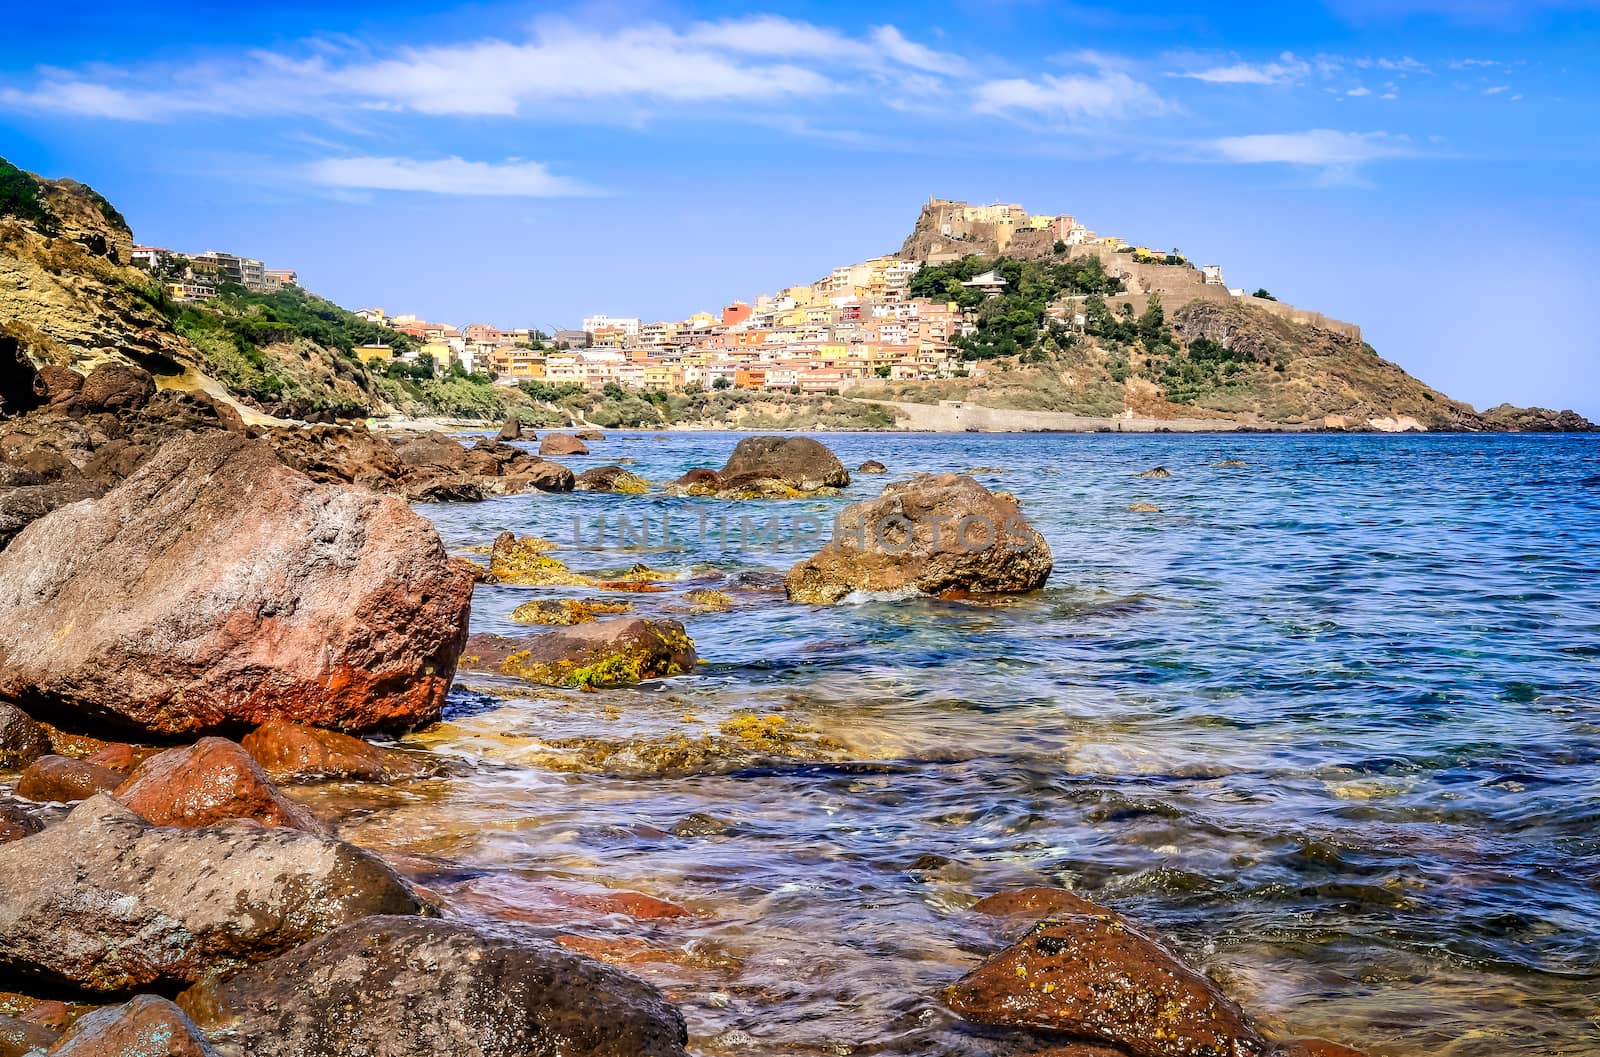 Rocky ocean coastline with colorful town Castelsardo, Sardinia, Italy